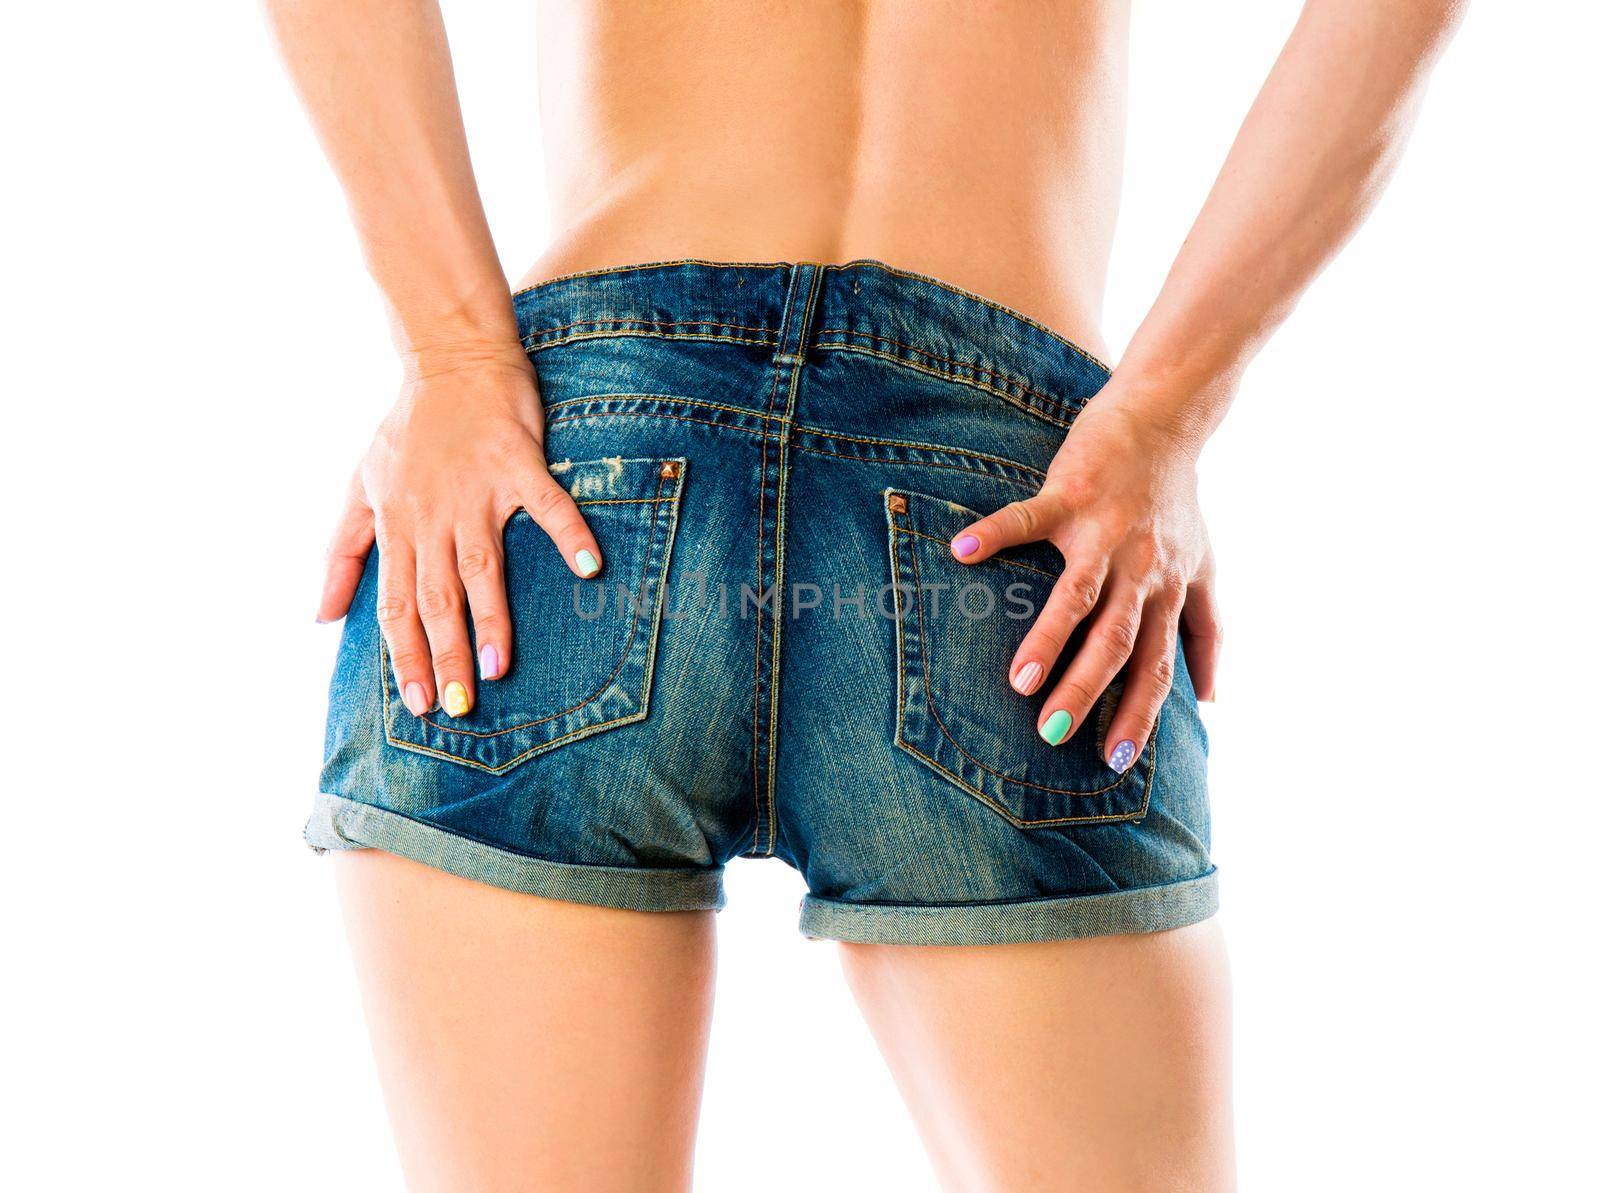 Sexy woman body in jeans shorts by GekaSkr